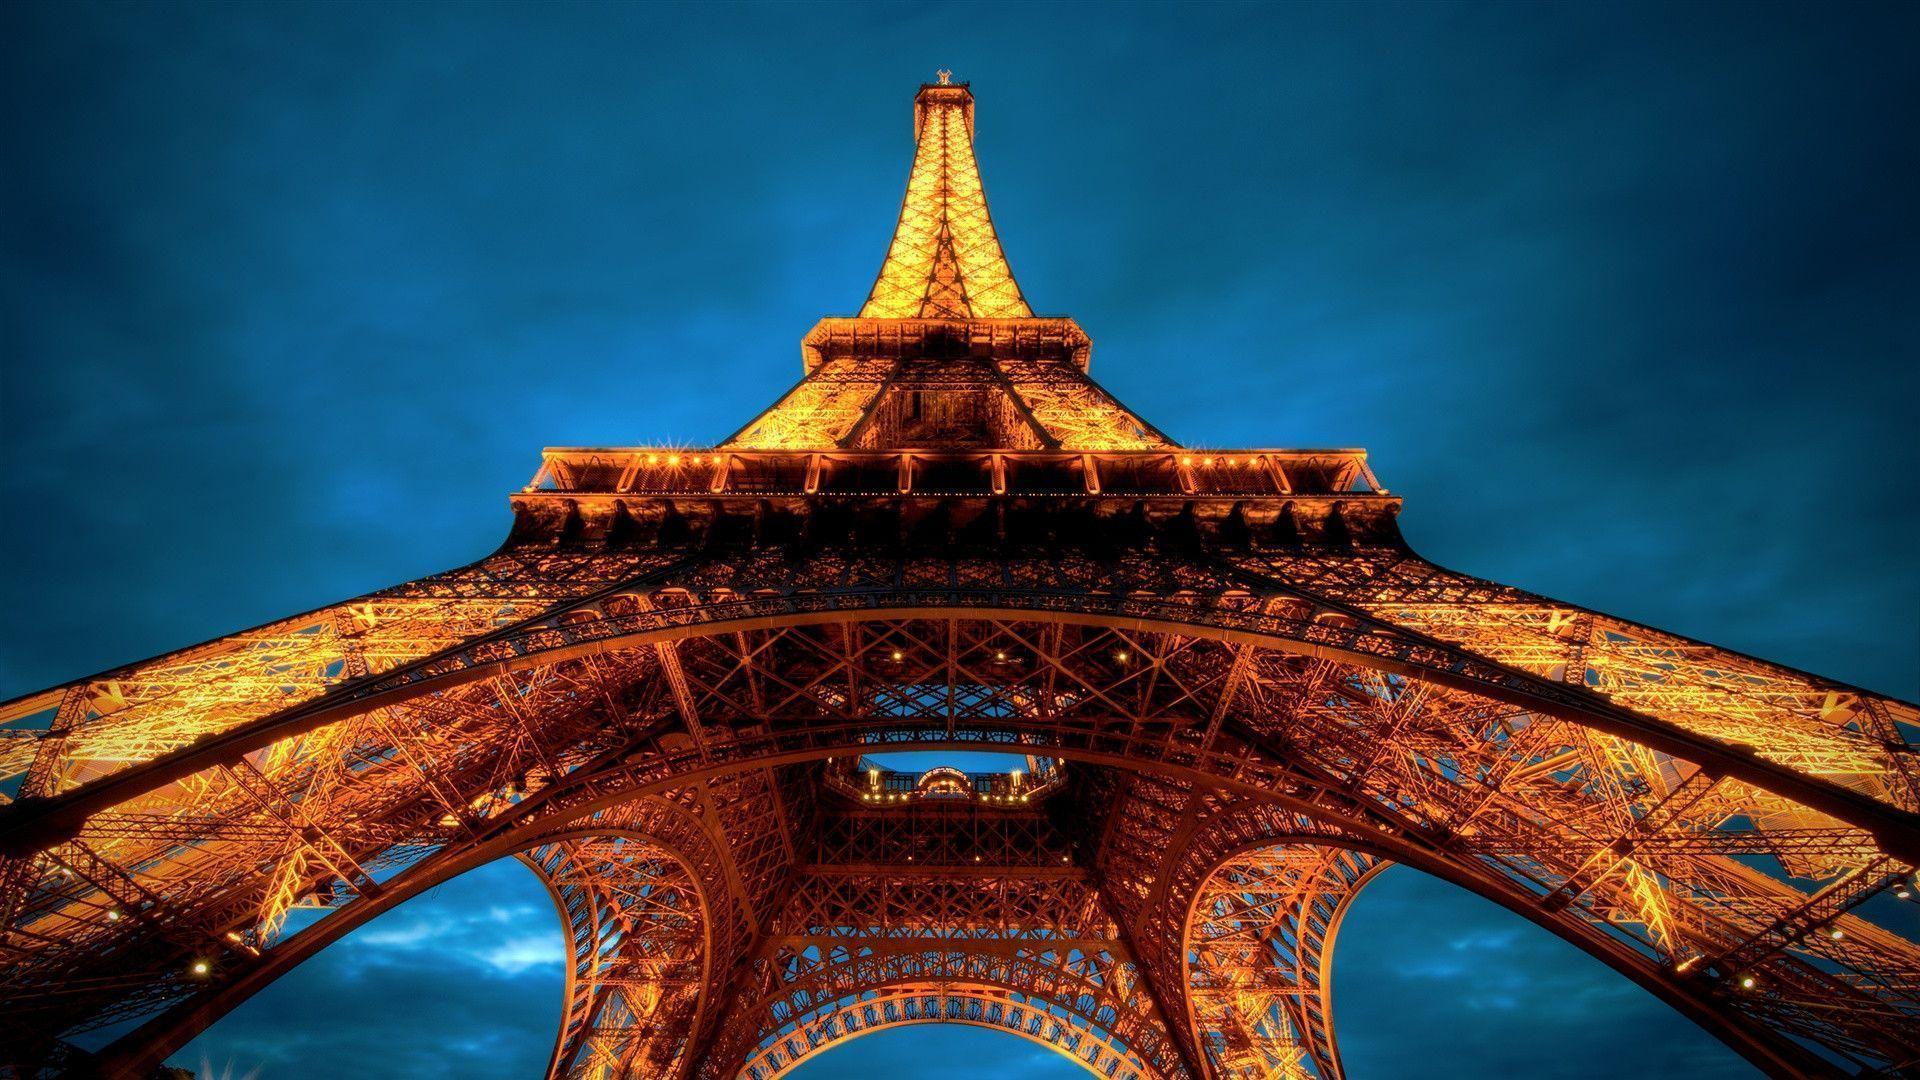 HD Eiffel Tower Wallpaper 1080p